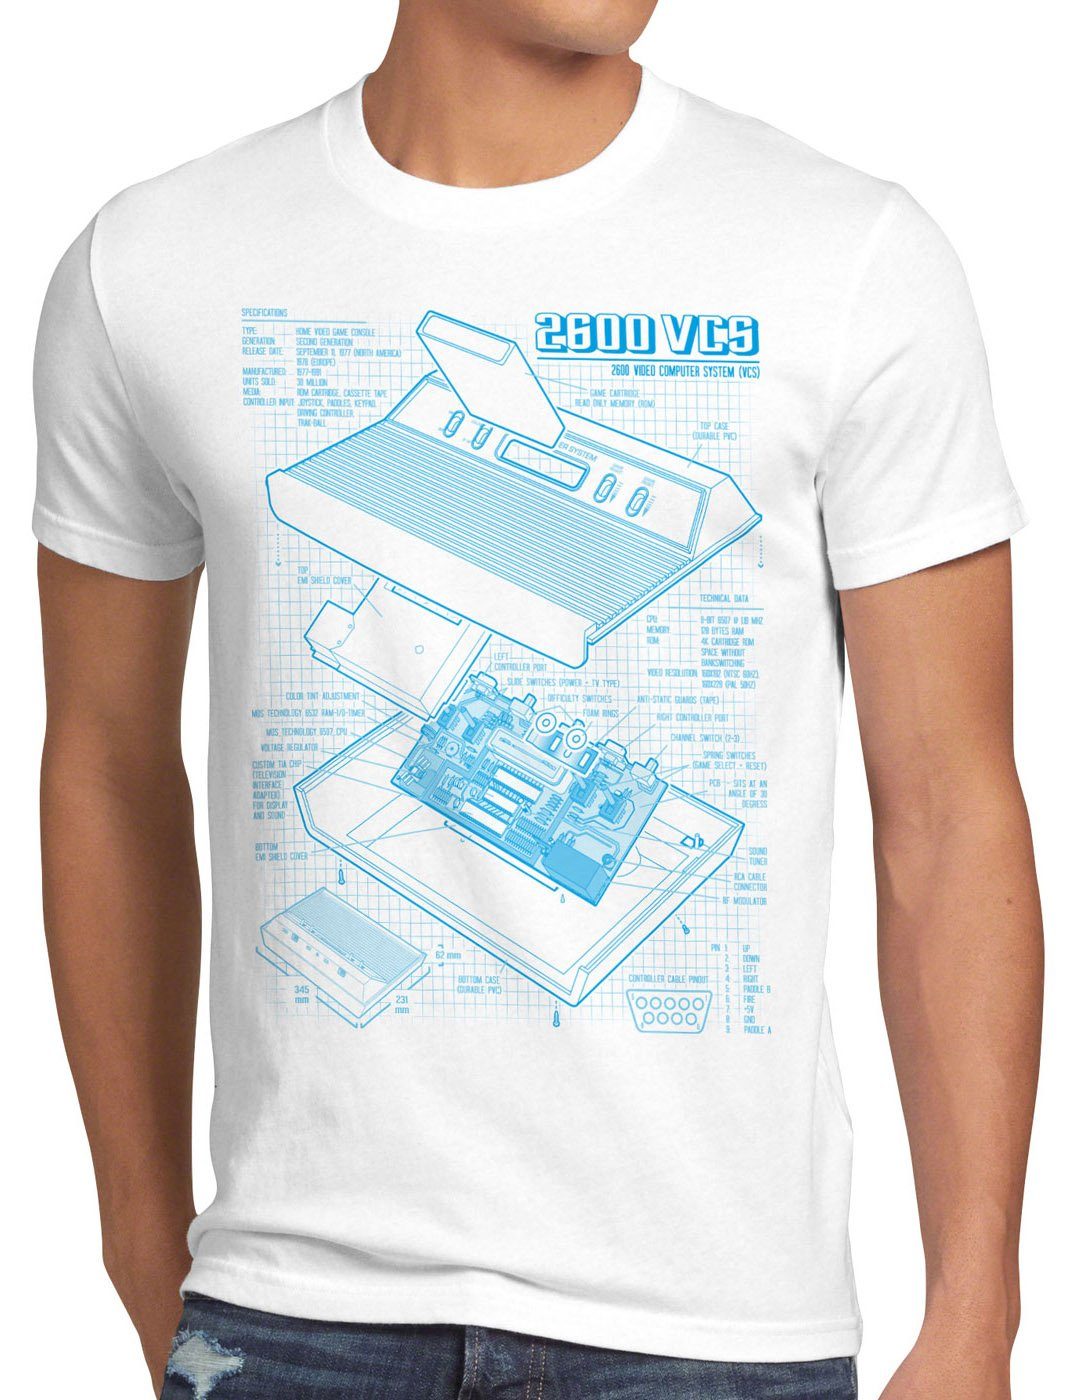 style3 Print-Shirt gamer classic VCS Blaupause 2600 T-Shirt Heimcomputer Herren weiß